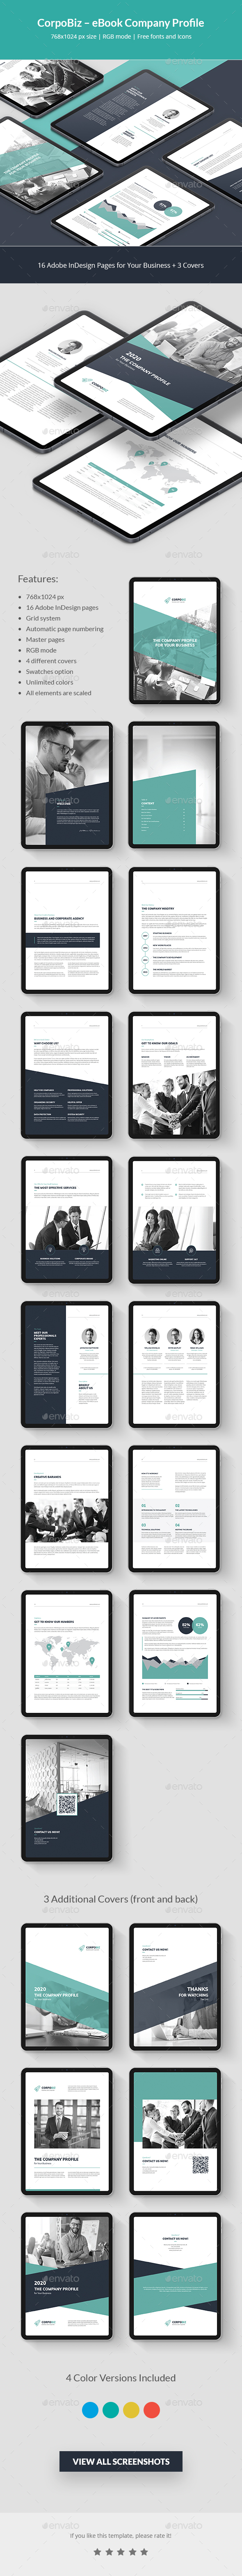 [DOWNLOAD]CorpoBiz – Business and Corporate eBook Company Profile